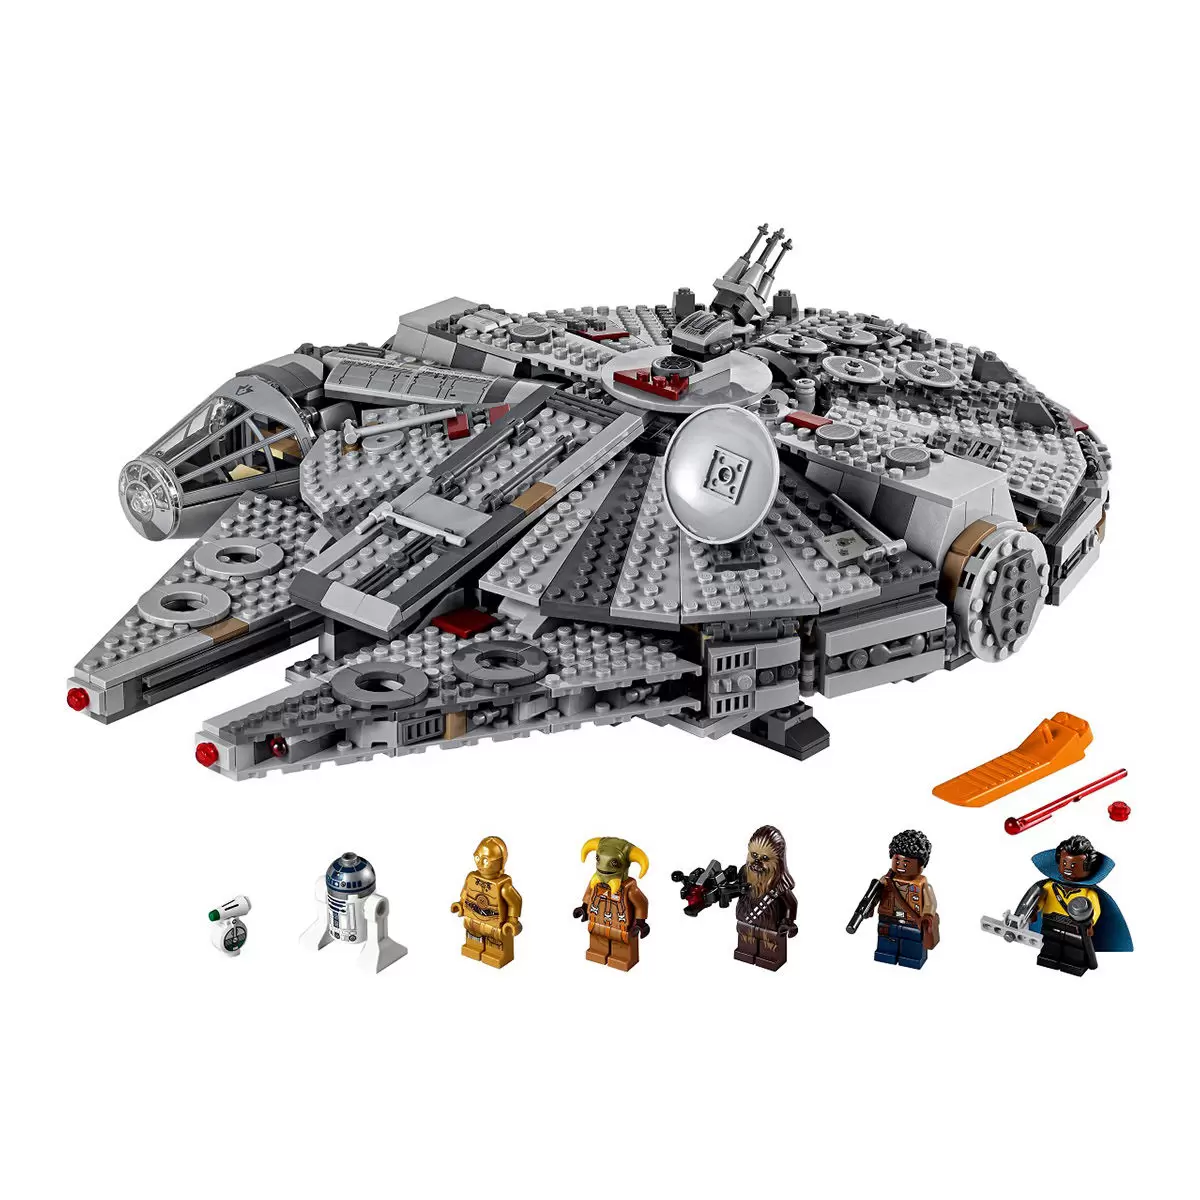 LEGO 星際大戰系列 千年鷹號 75257